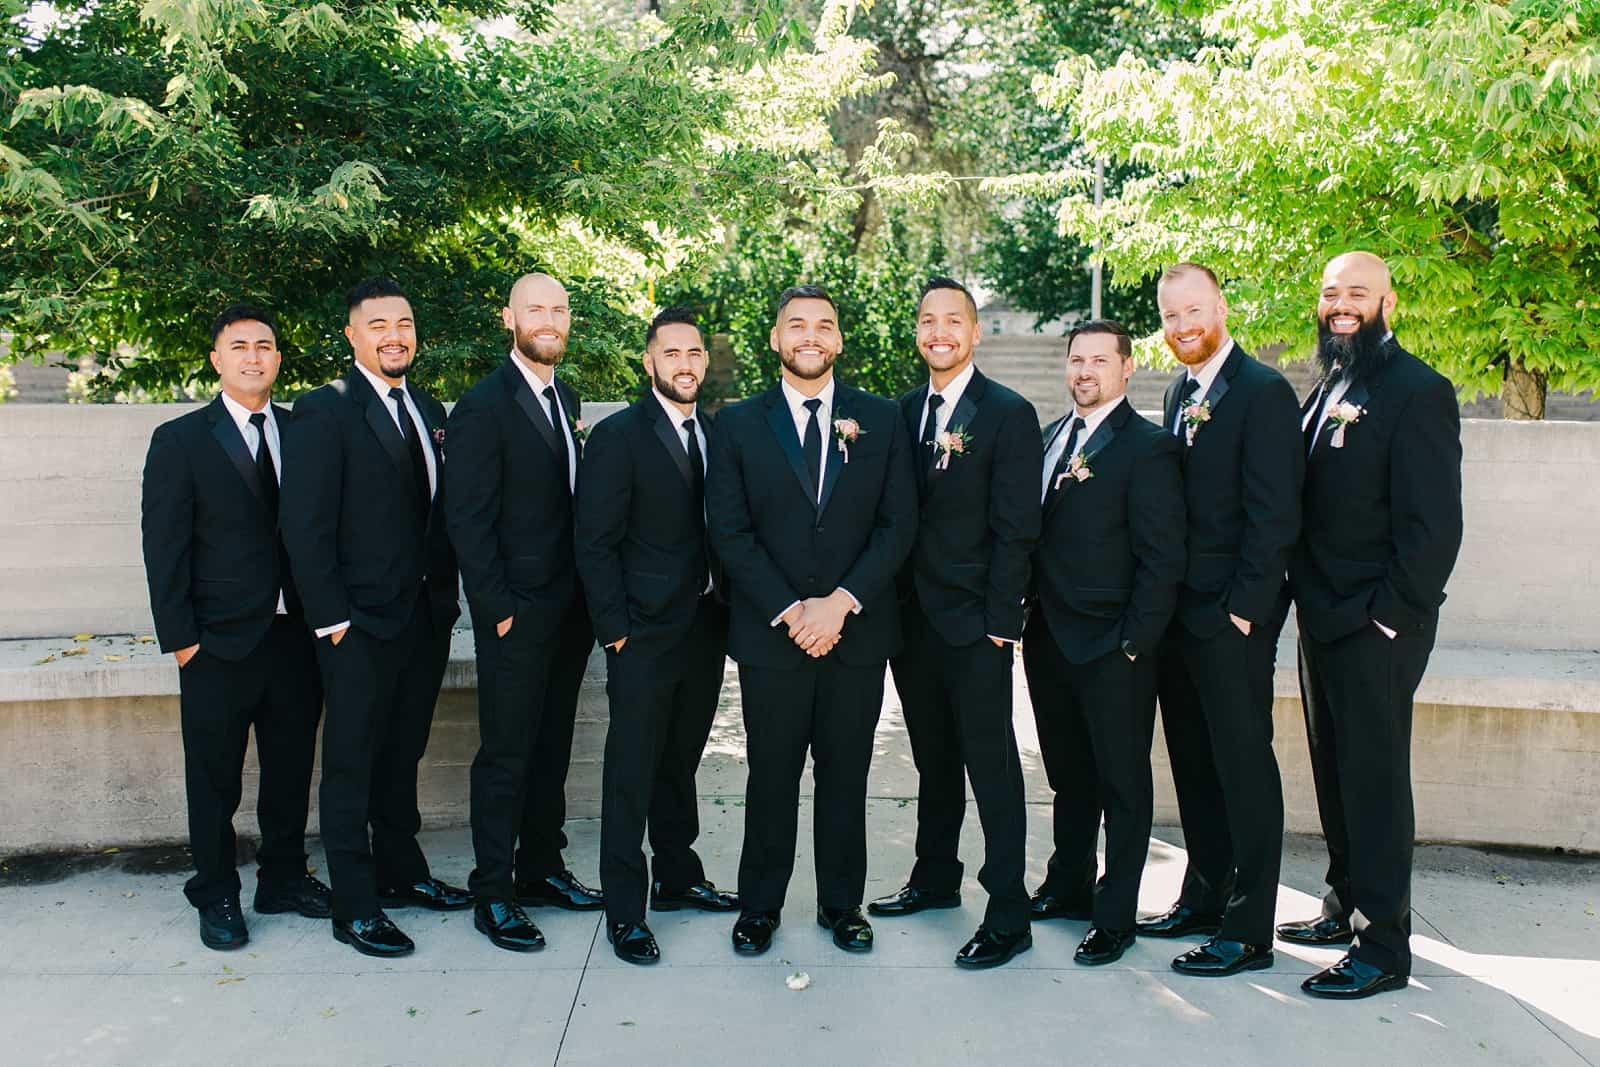 Groom and groomsmen in classic black tuxedos